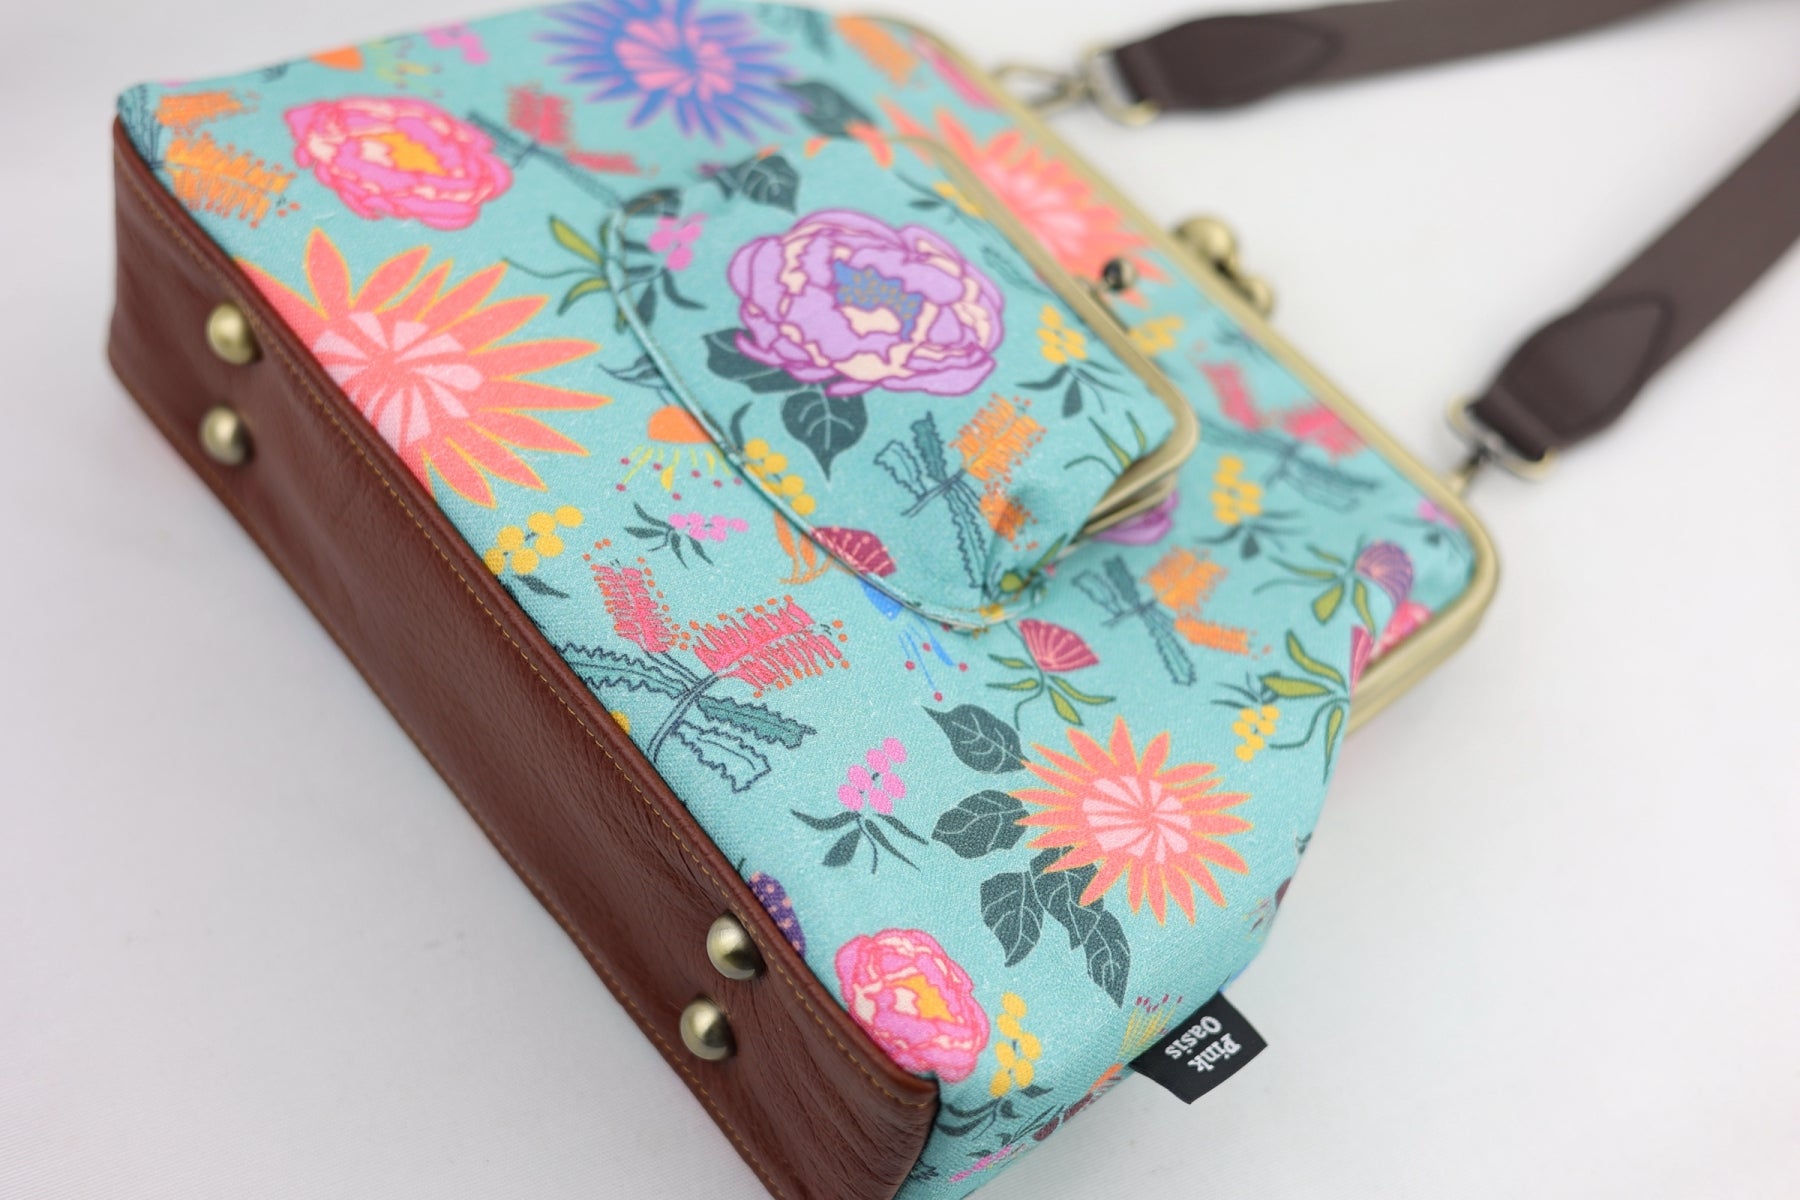 Bright & Bold Flowers Handbag and Crossbody 2 Way Bag | PINK OASIS